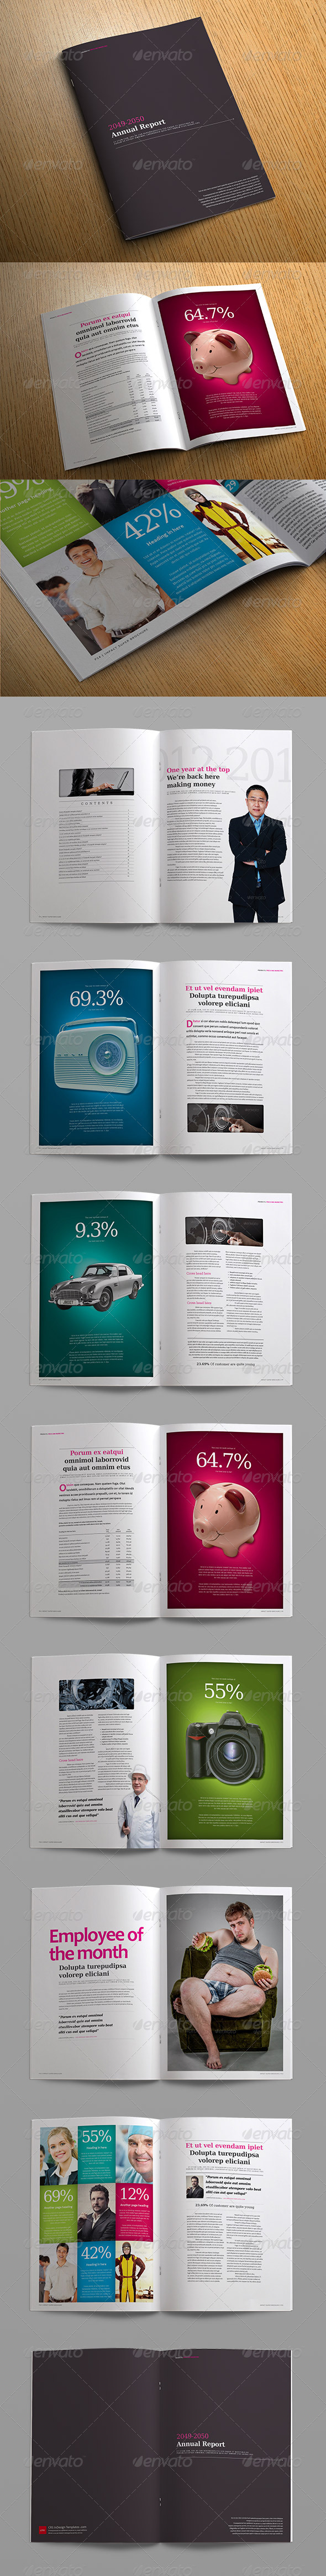 Impact Annual Report/Corporate Brochure